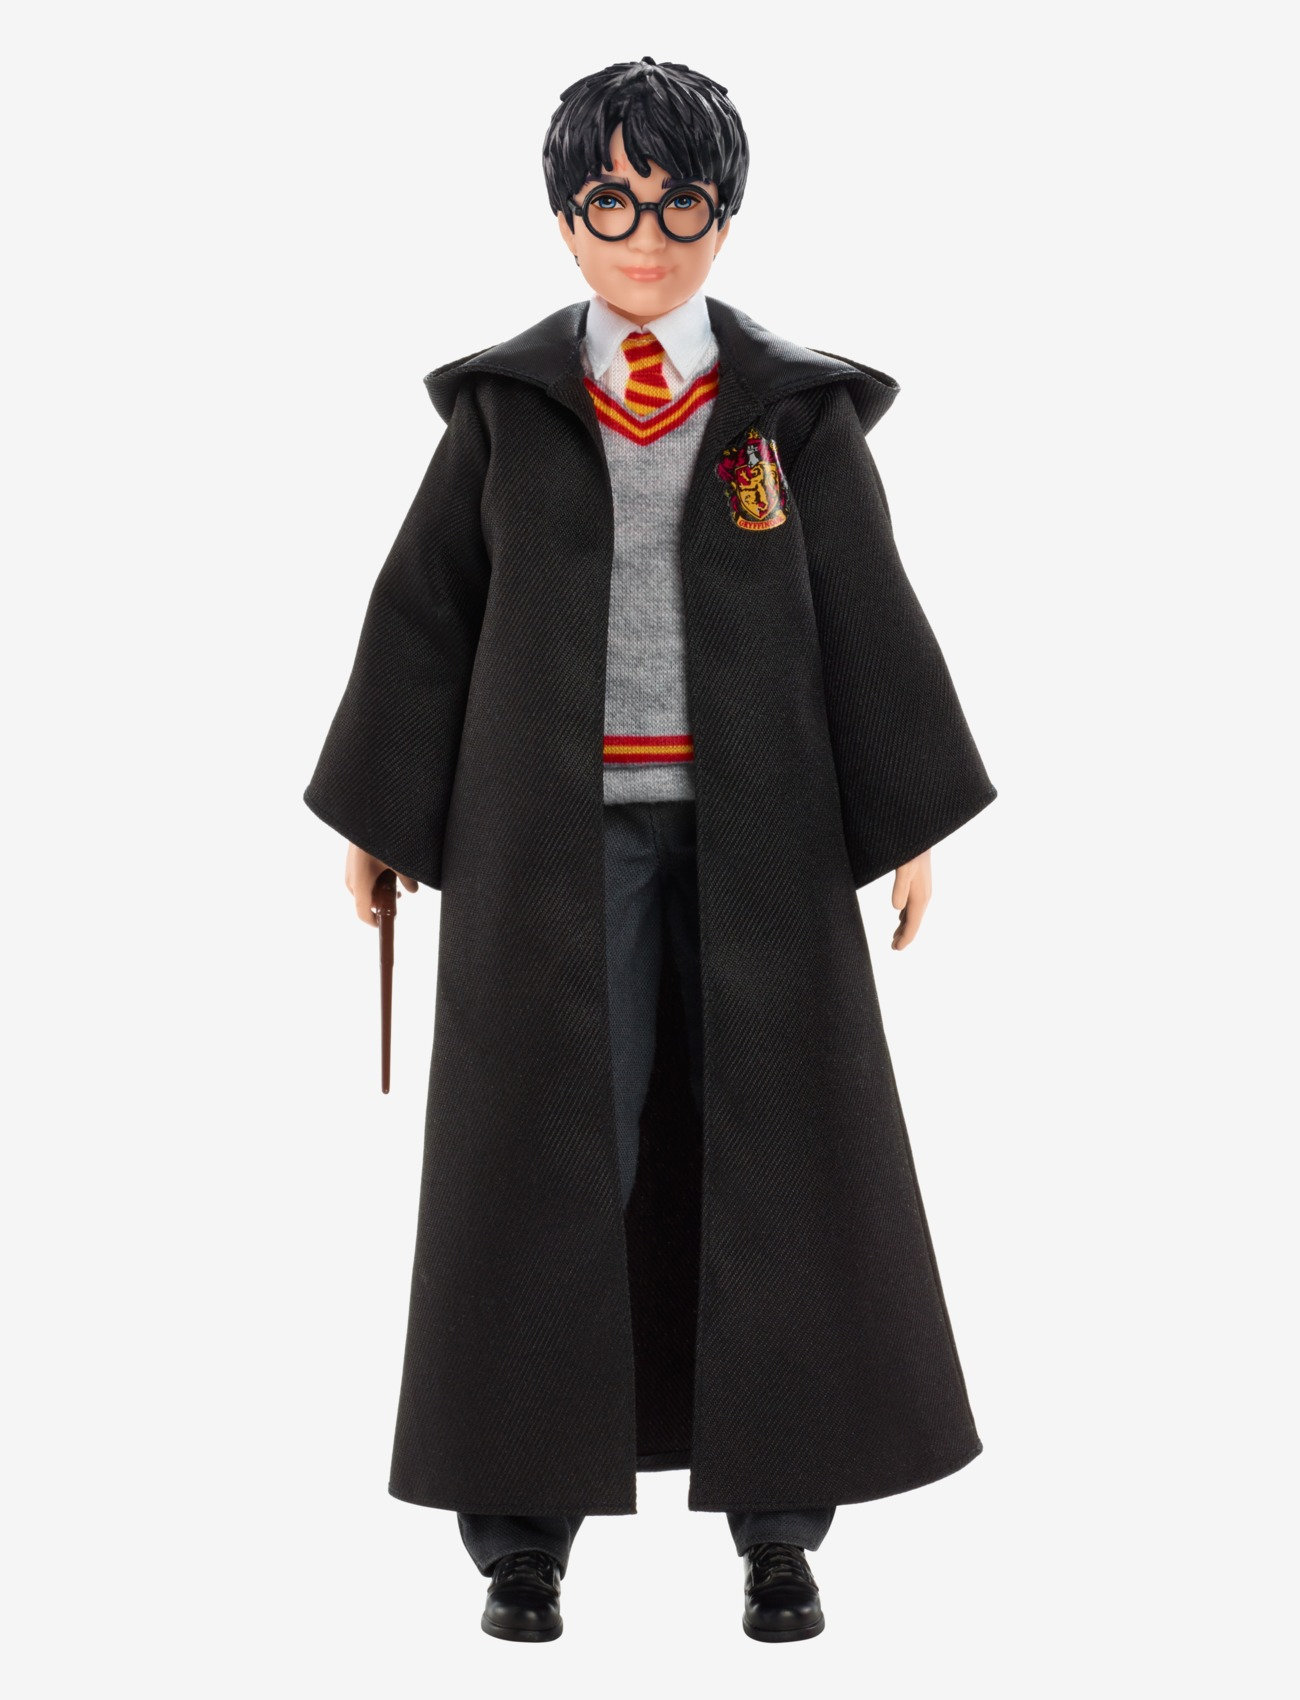 Harry Potter - Harry Potter Doll - karakterer fra filmer og eventyr - multi color - 0